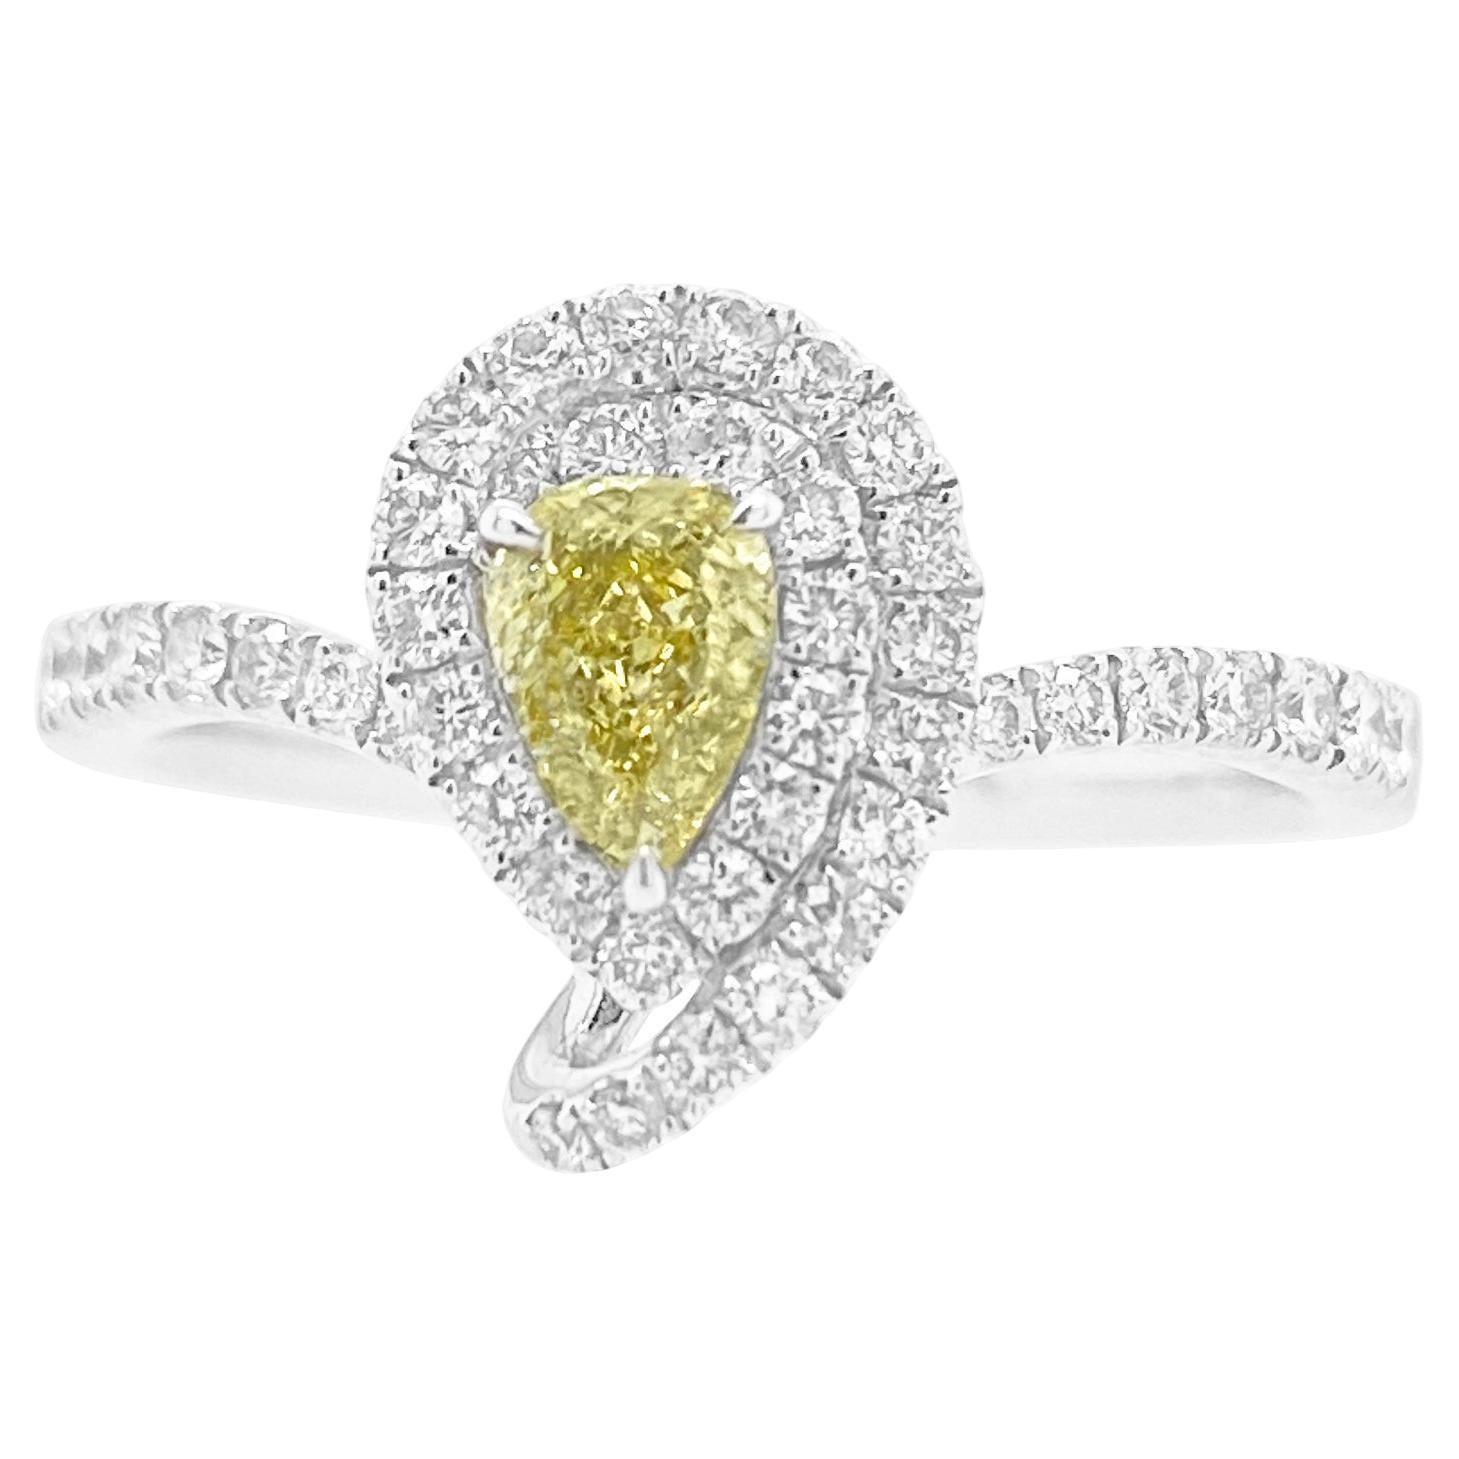 Rare bague fantaisie en diamant jaune et blanc intense